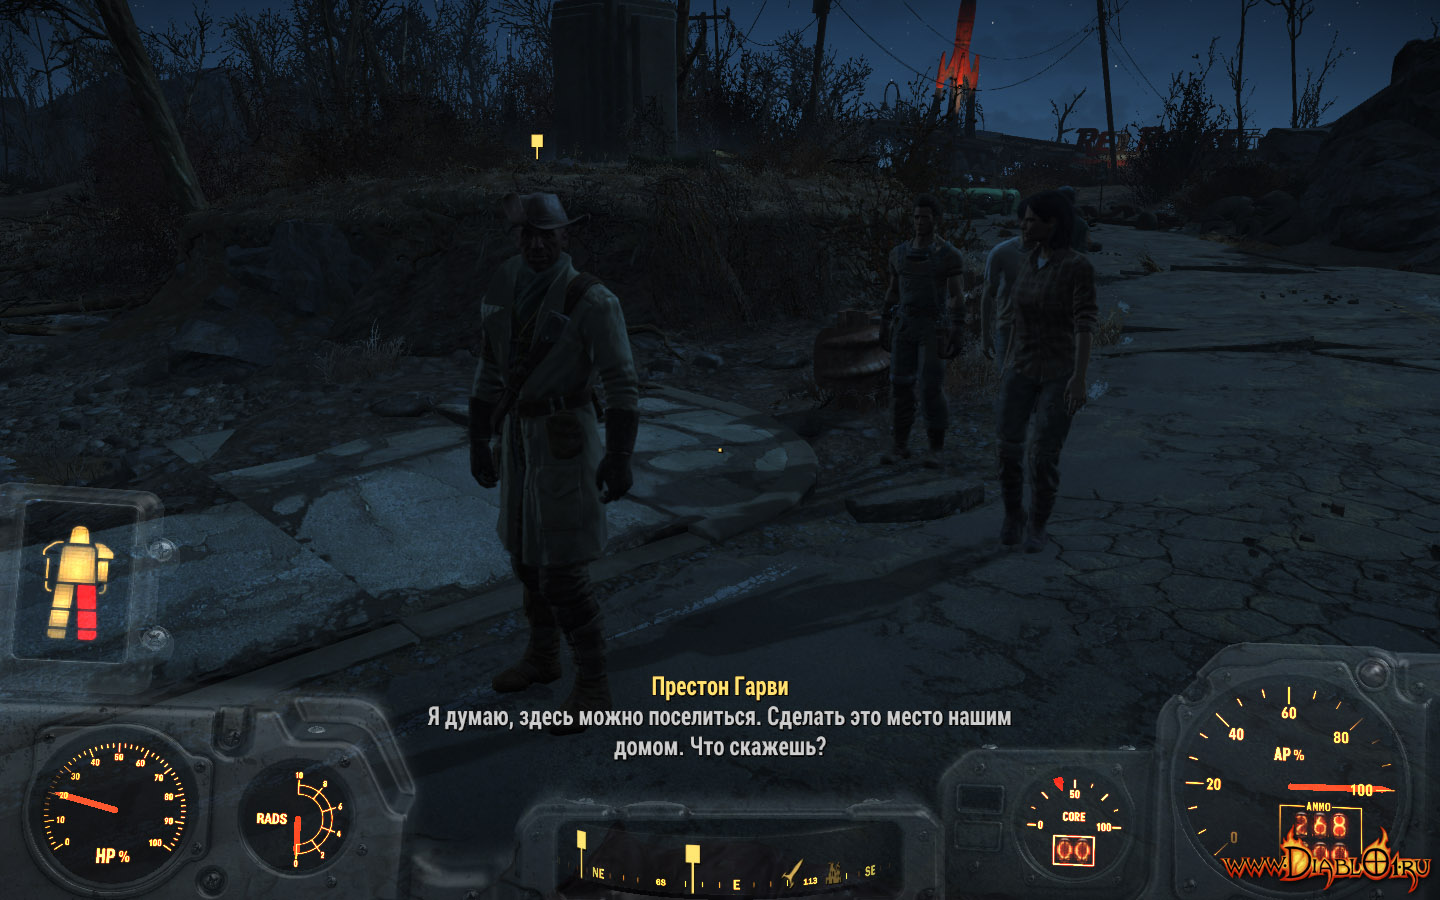 Fallout 4 как вернуть доверие престона гарви фото 56